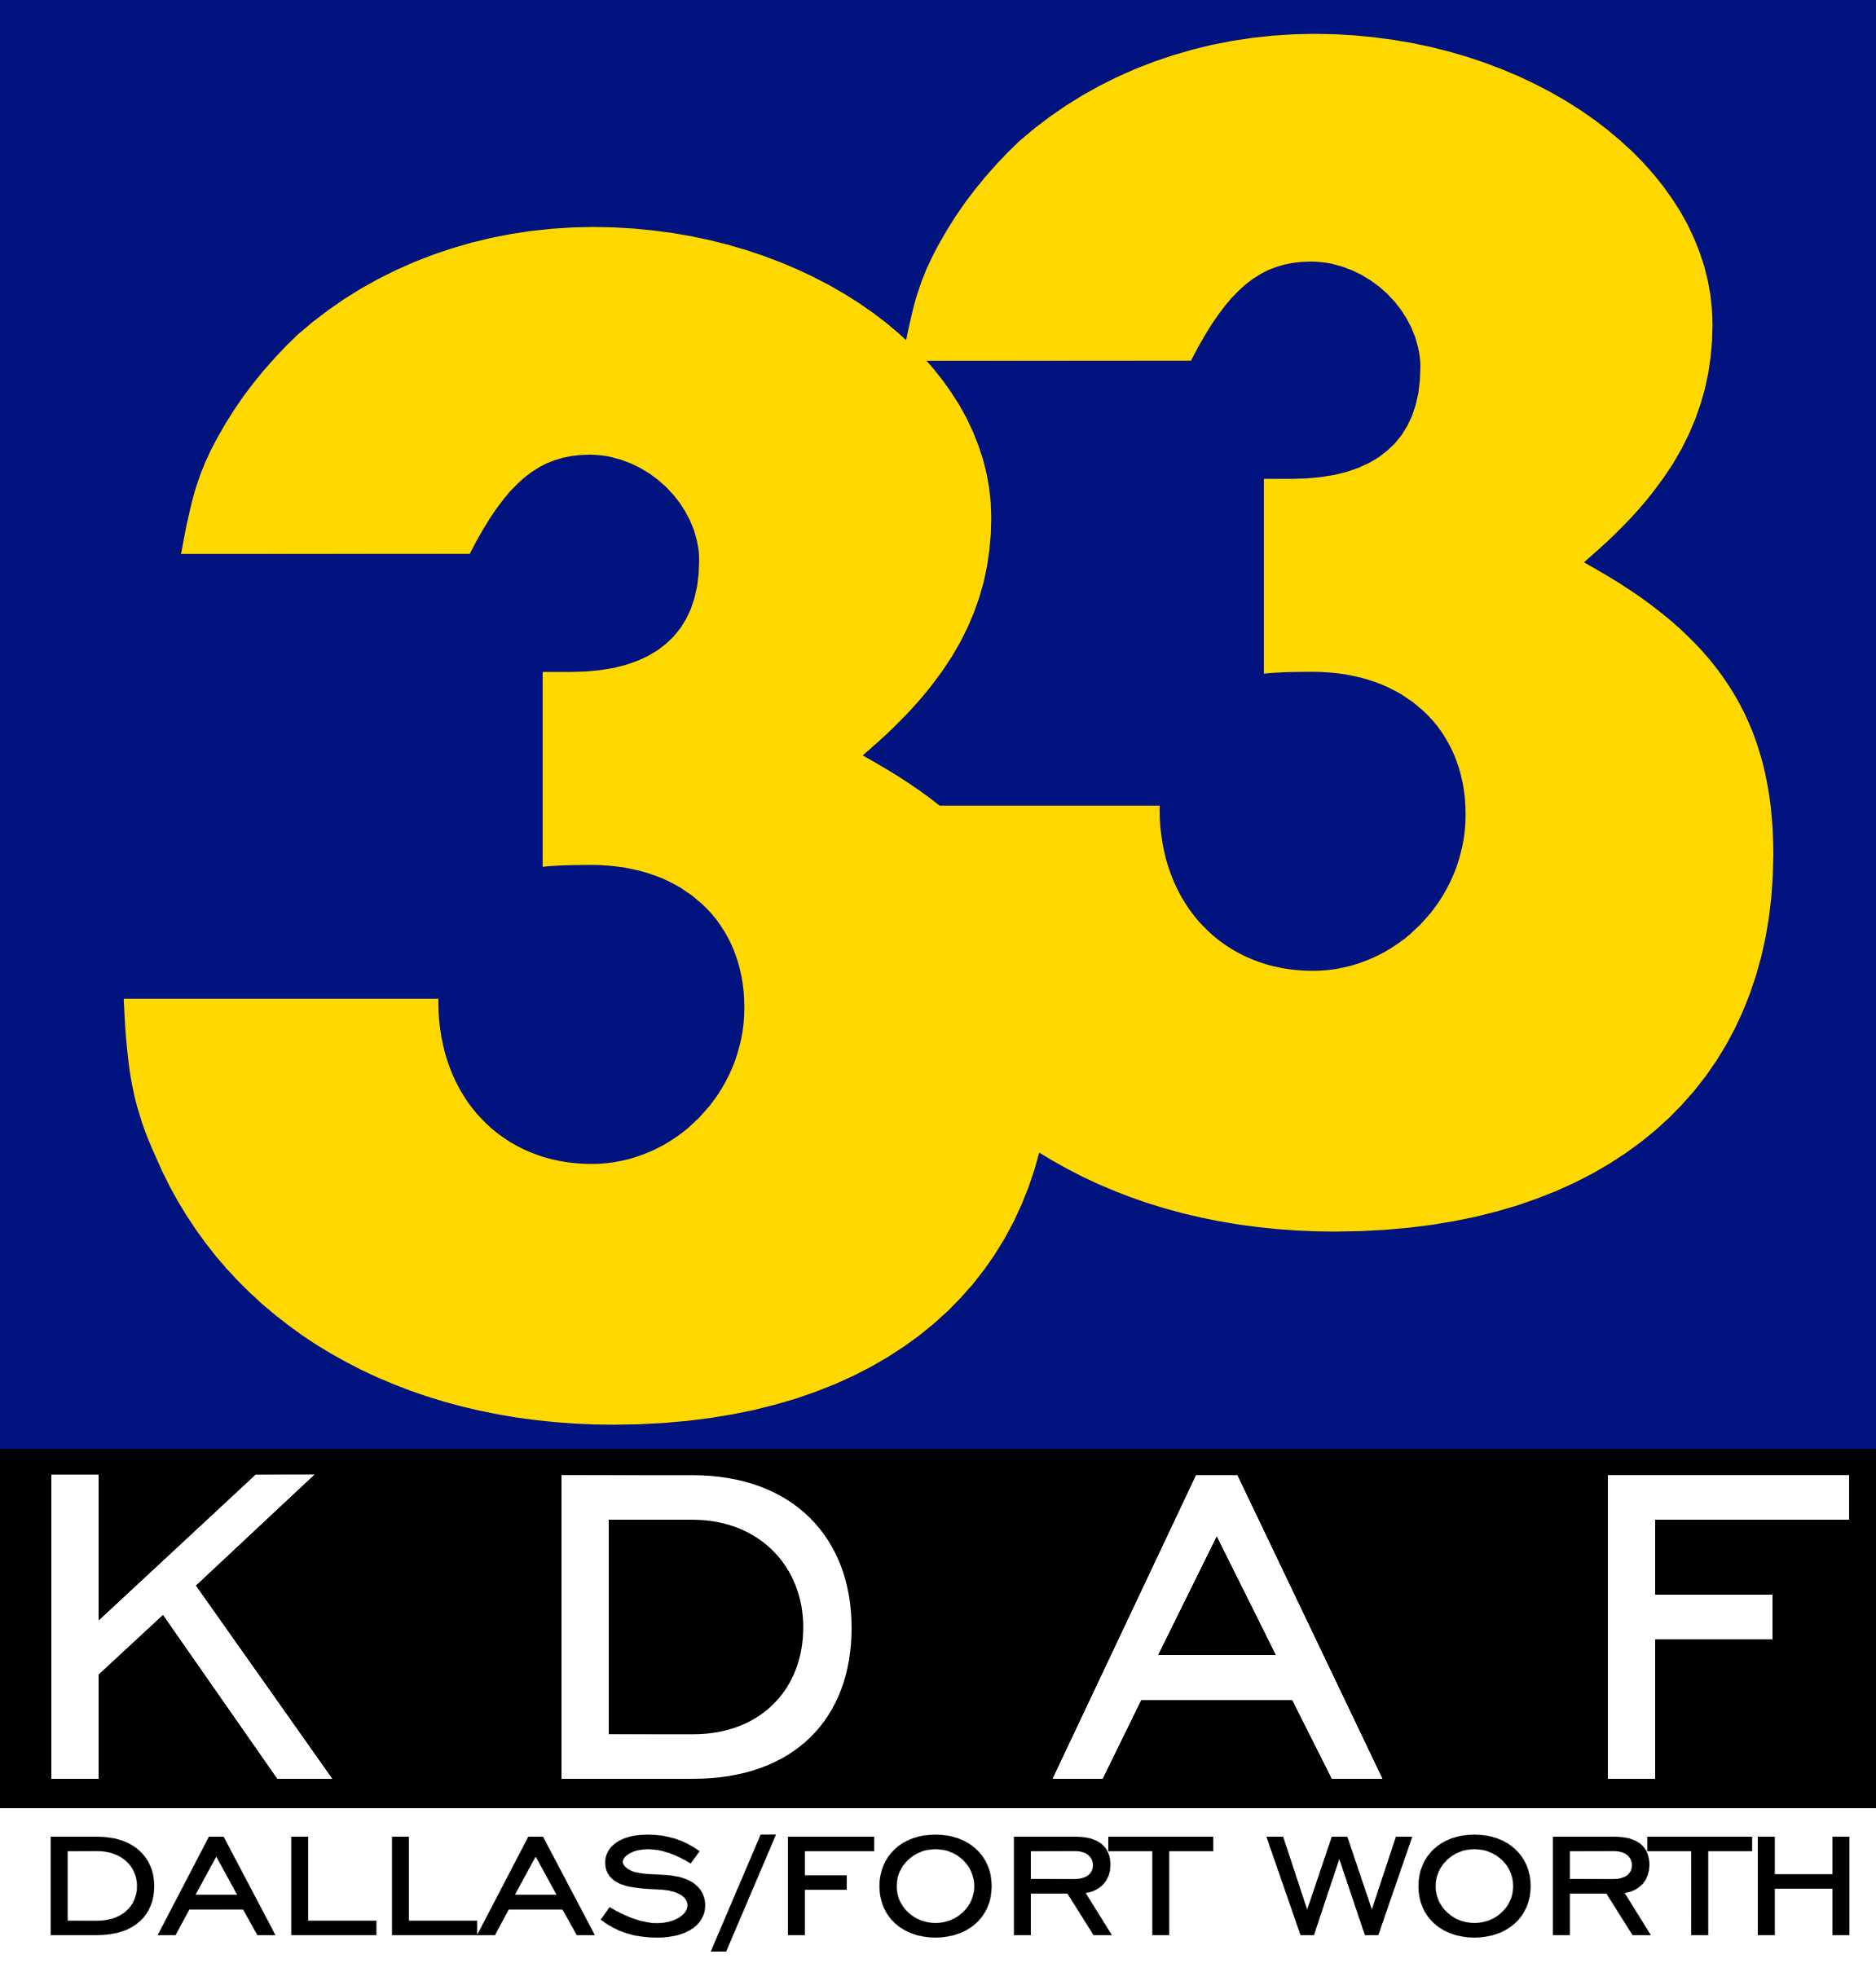 AlternateHistory.com's KDAF logo #1.png